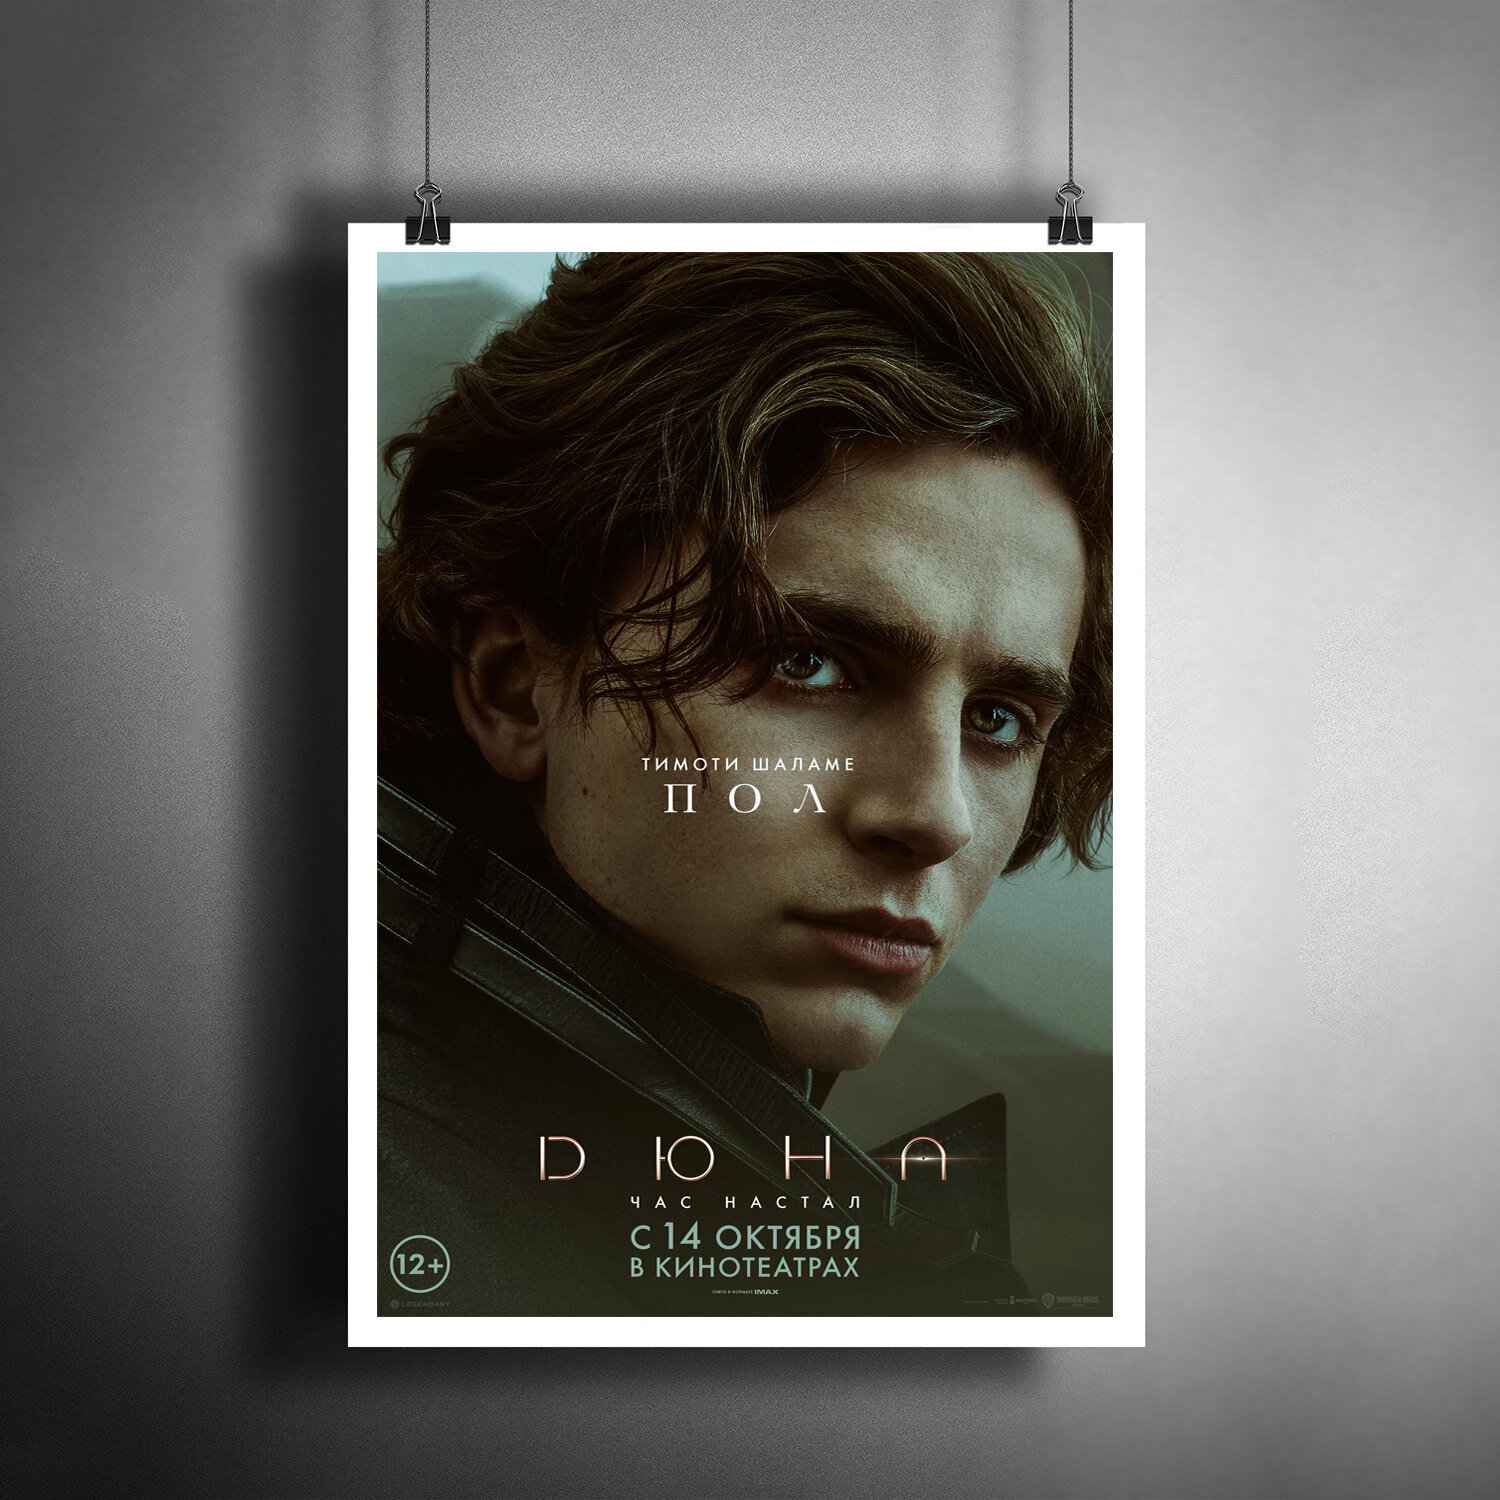 Постер плакат для интерьера "Фильм: Дюна. The Dune. Тимоти Шаламе"/ Декор дома, офиса, комнаты A3 (297 x 420 мм)